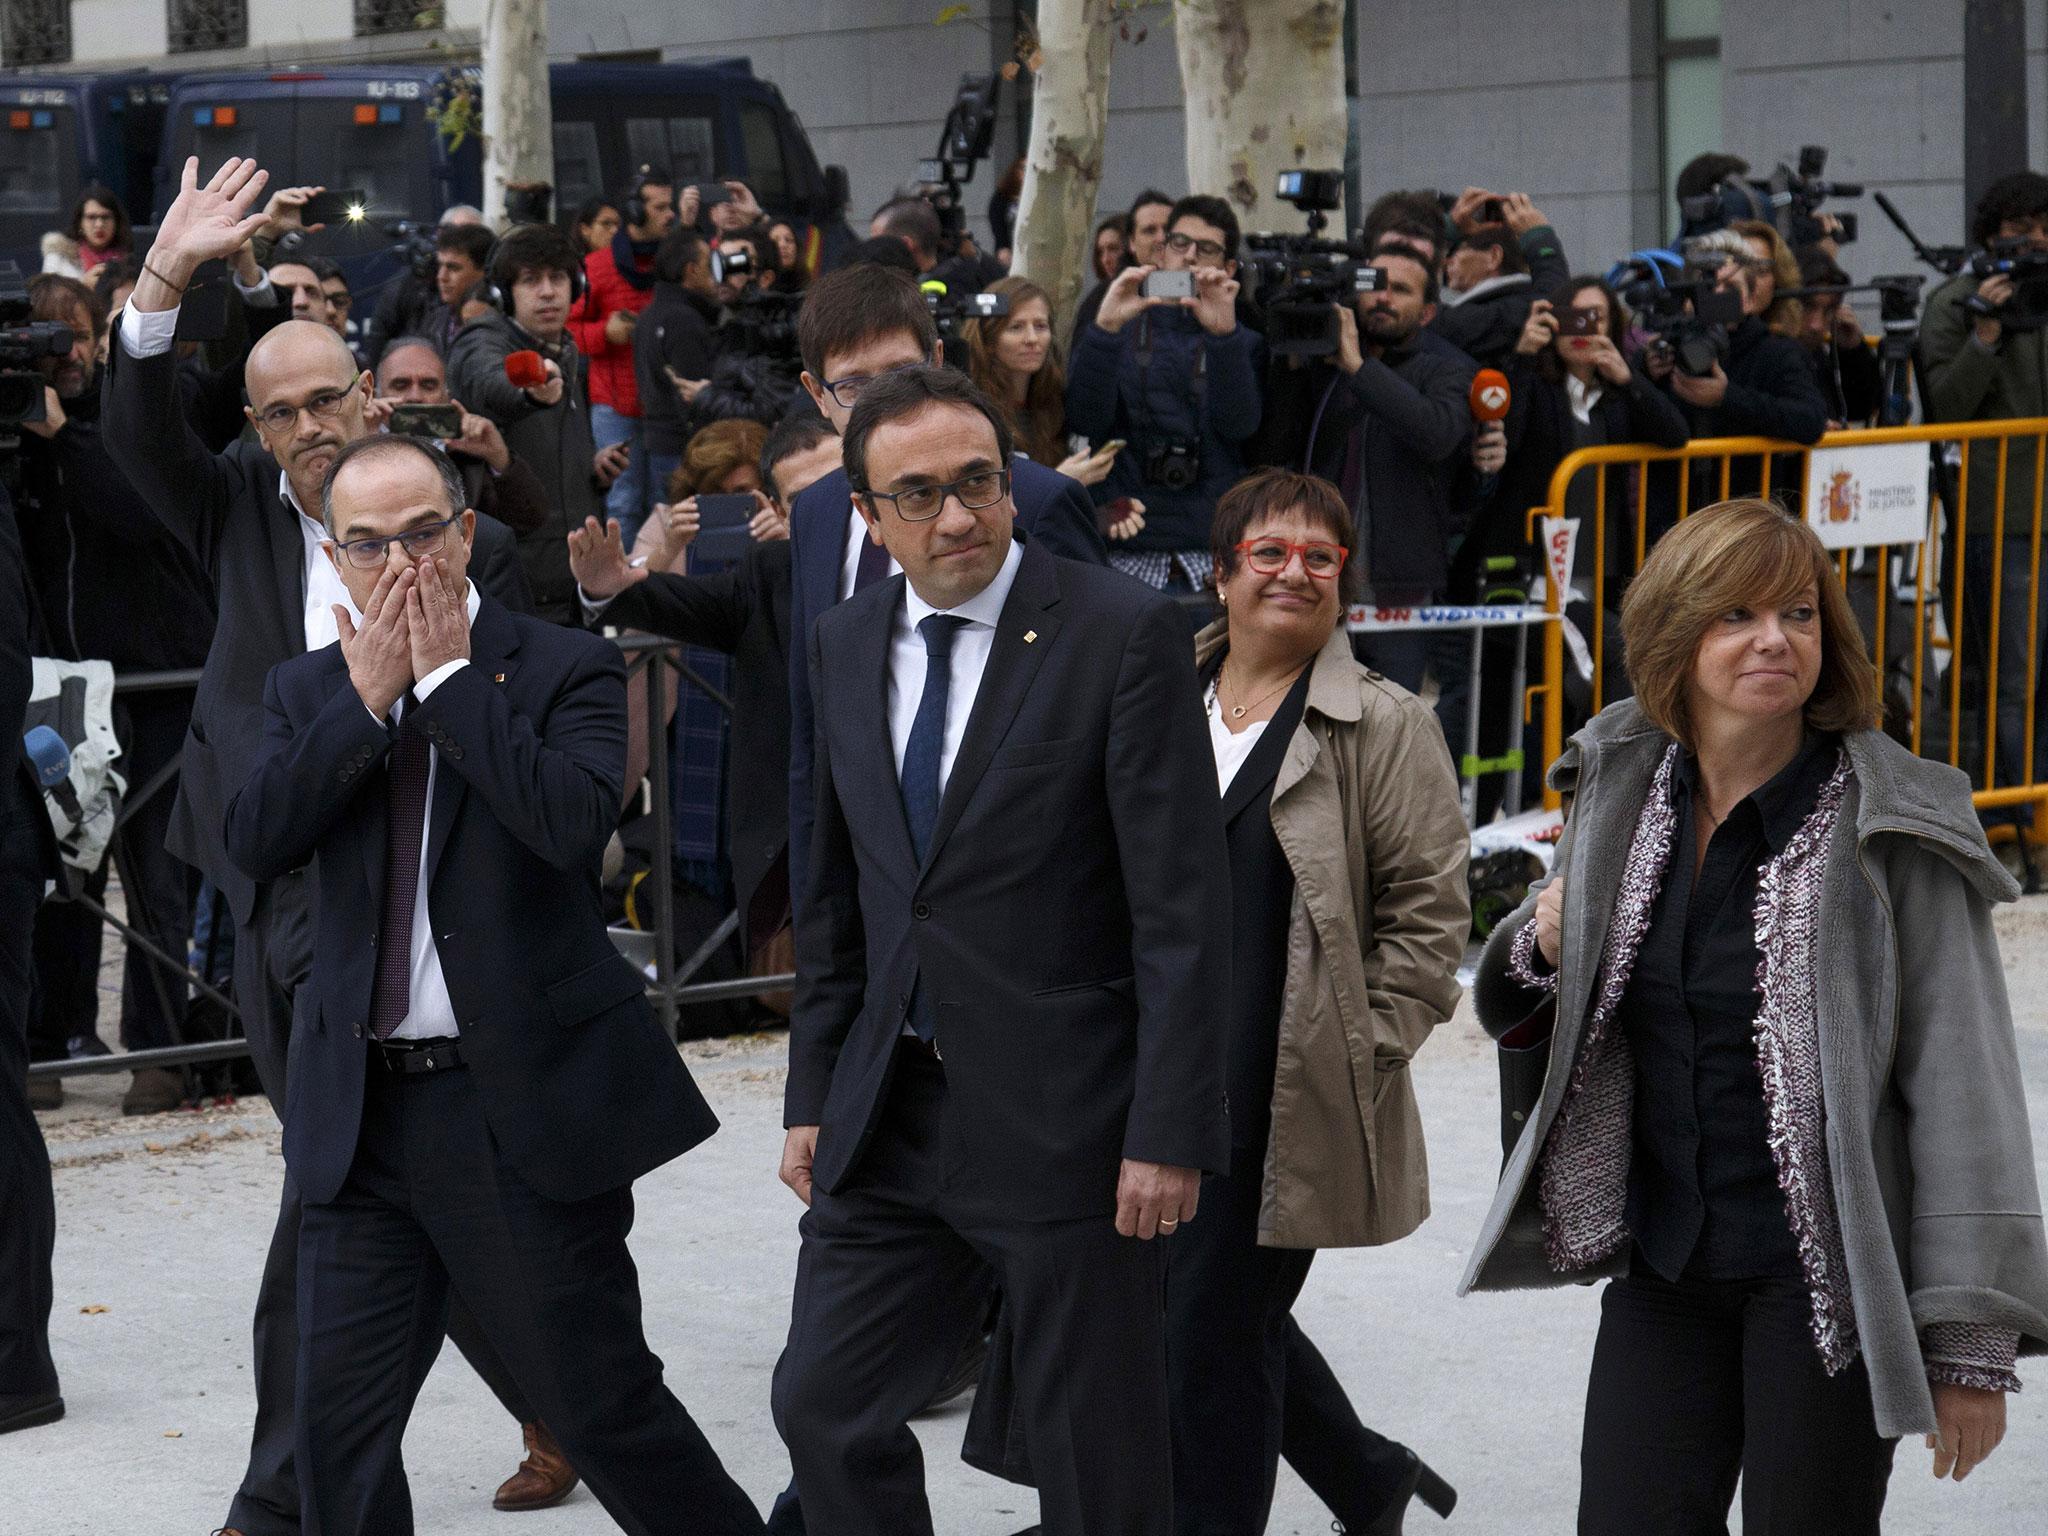 L-r: deposed Catalan leaders Raul Romeva, Josep Rull, Carles Mundo, Jordi Turull, Dolors Bassa and Meritxell Borras arrive at Spain's National High Court ahead of the hearing